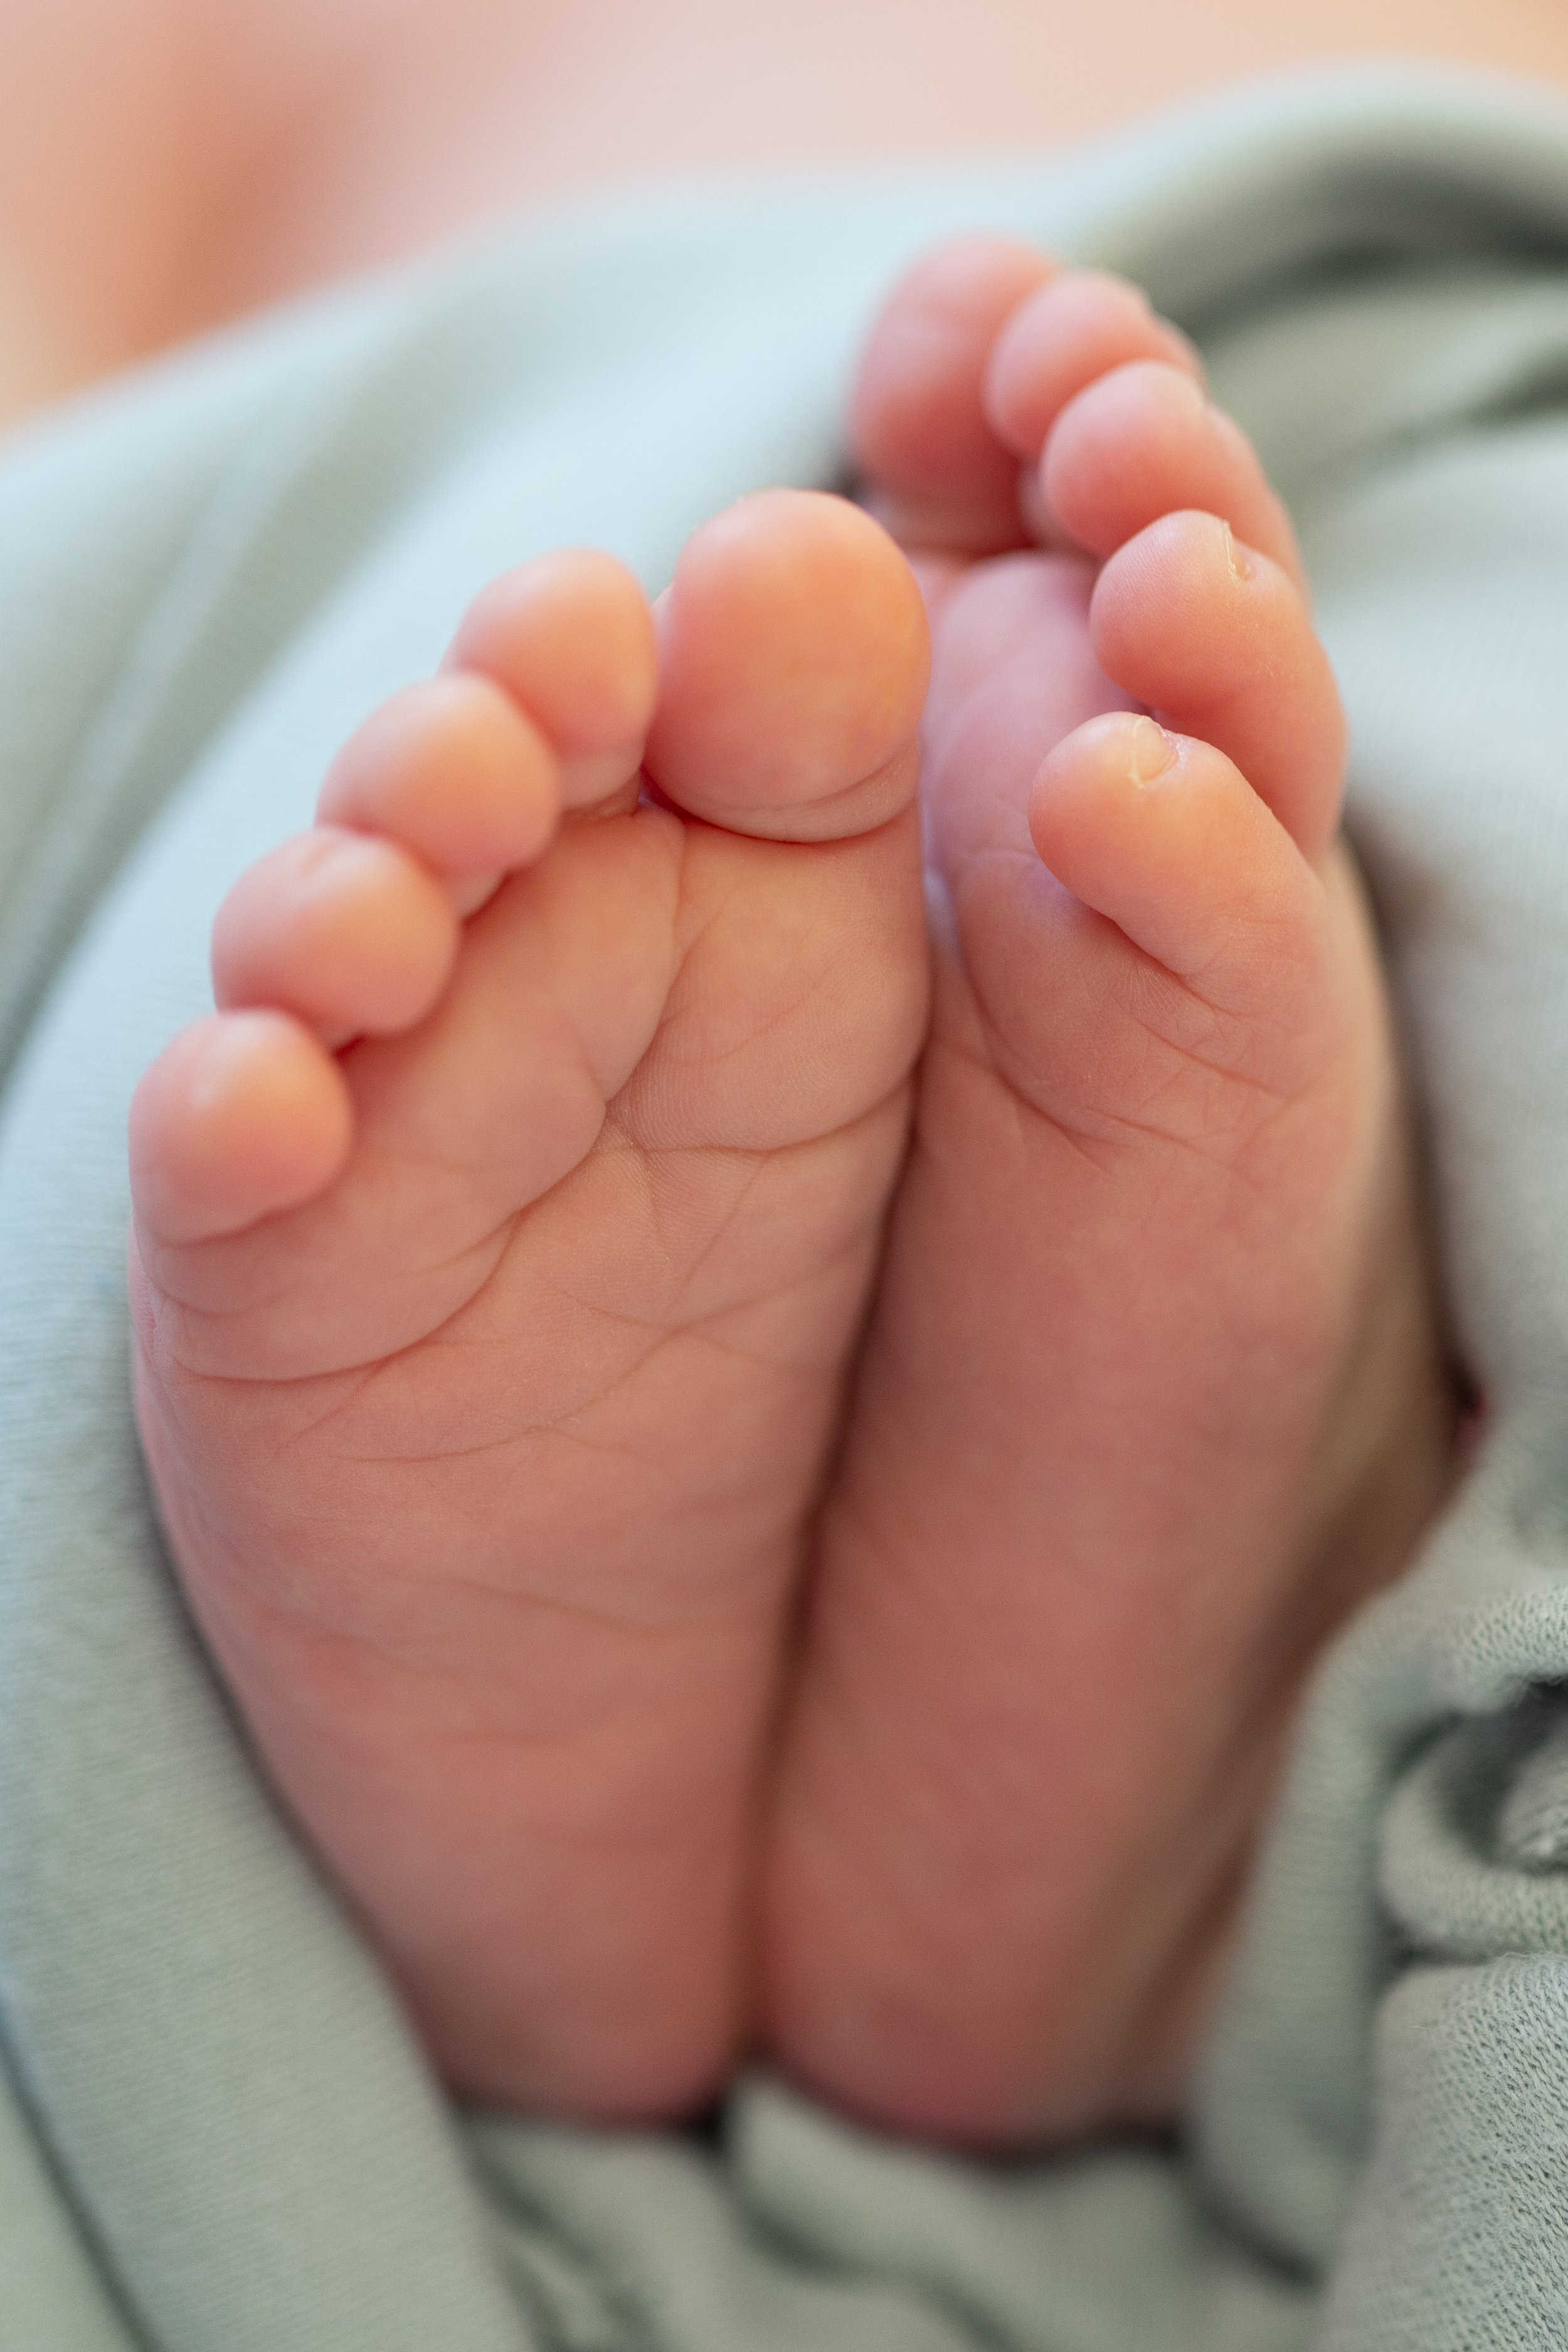 newborn baby feet swaddled in blue